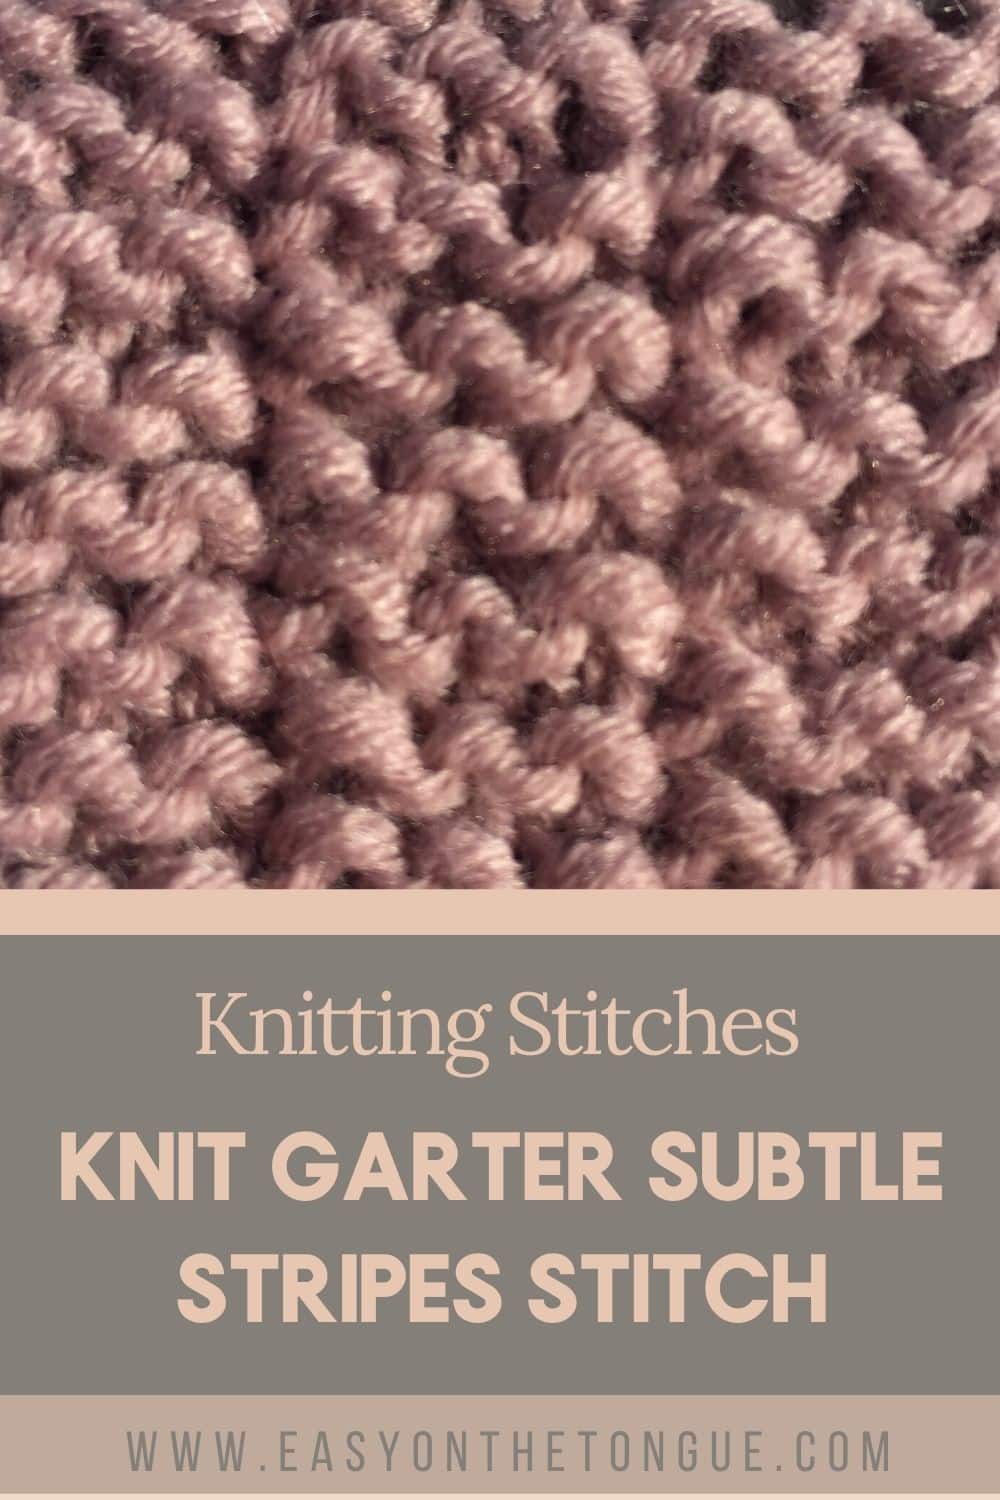 Garter Subtle Stripes, an easy knitting stitch